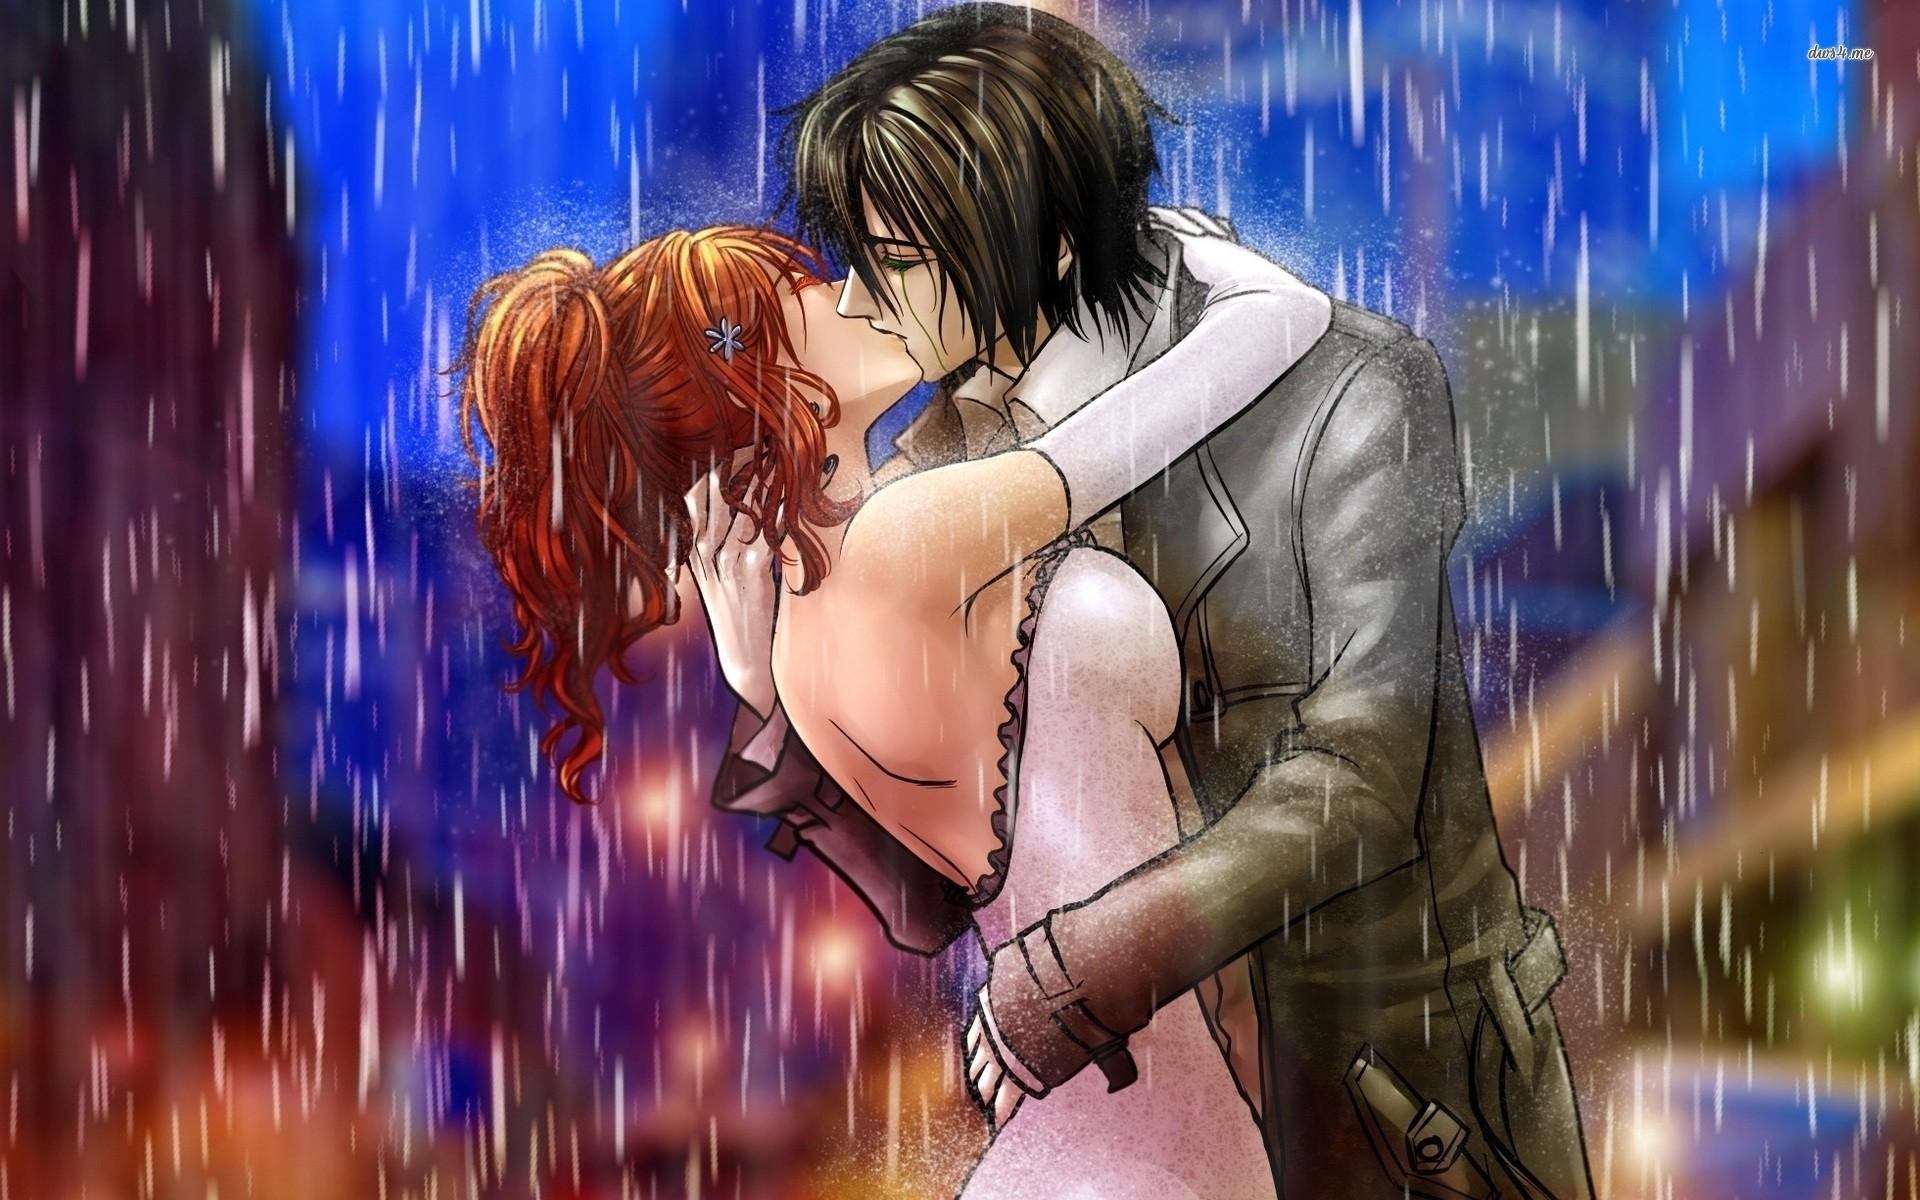 Couple kissing in the rain wallpaper wallpaper